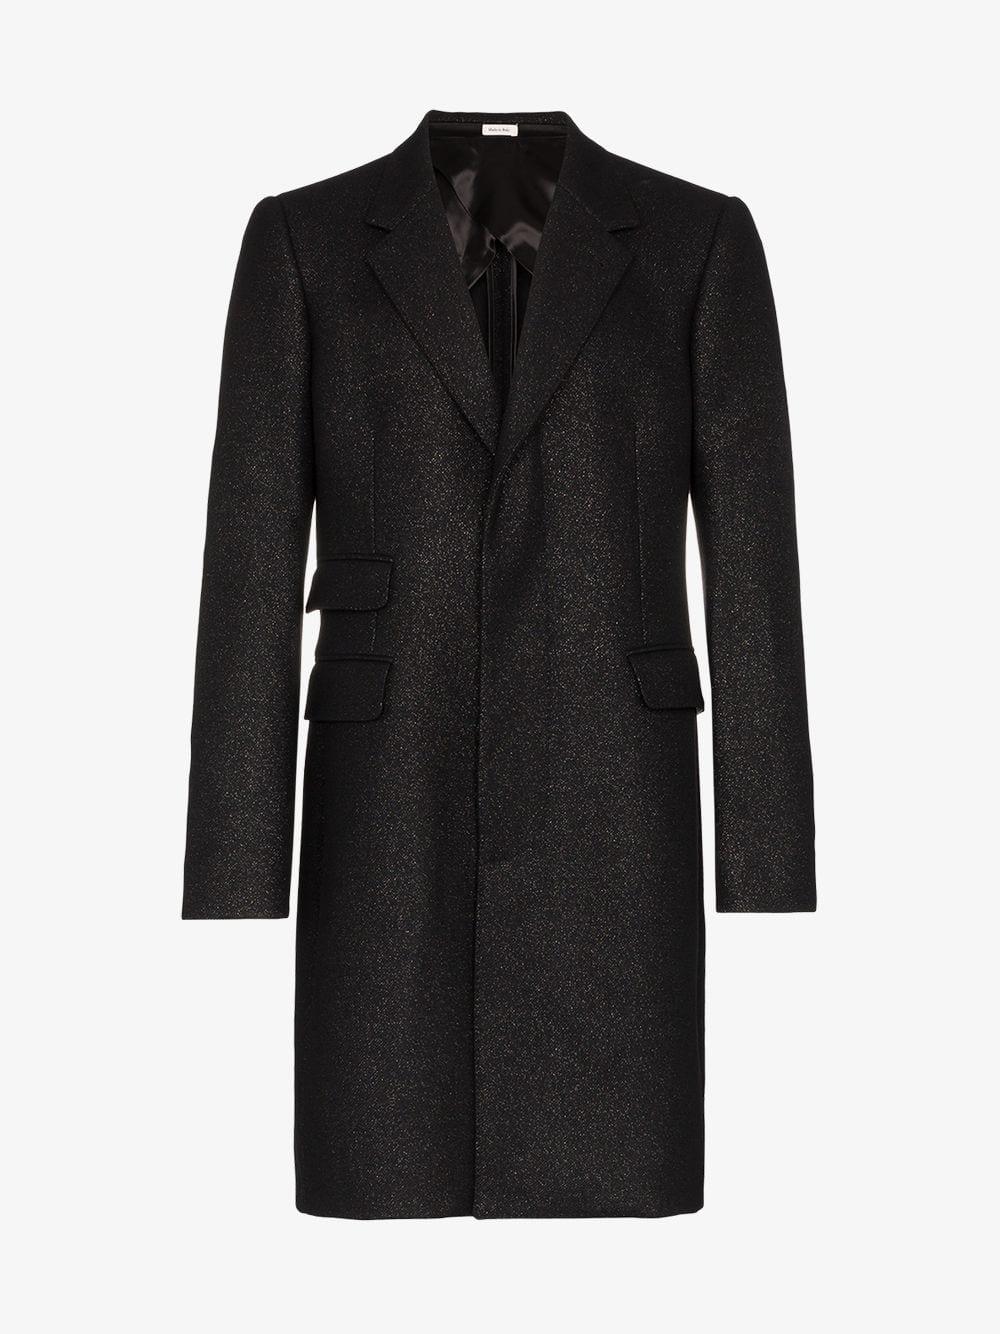 Alexander McQueen Single-breasted Crombie Coat in Black for Men - Lyst